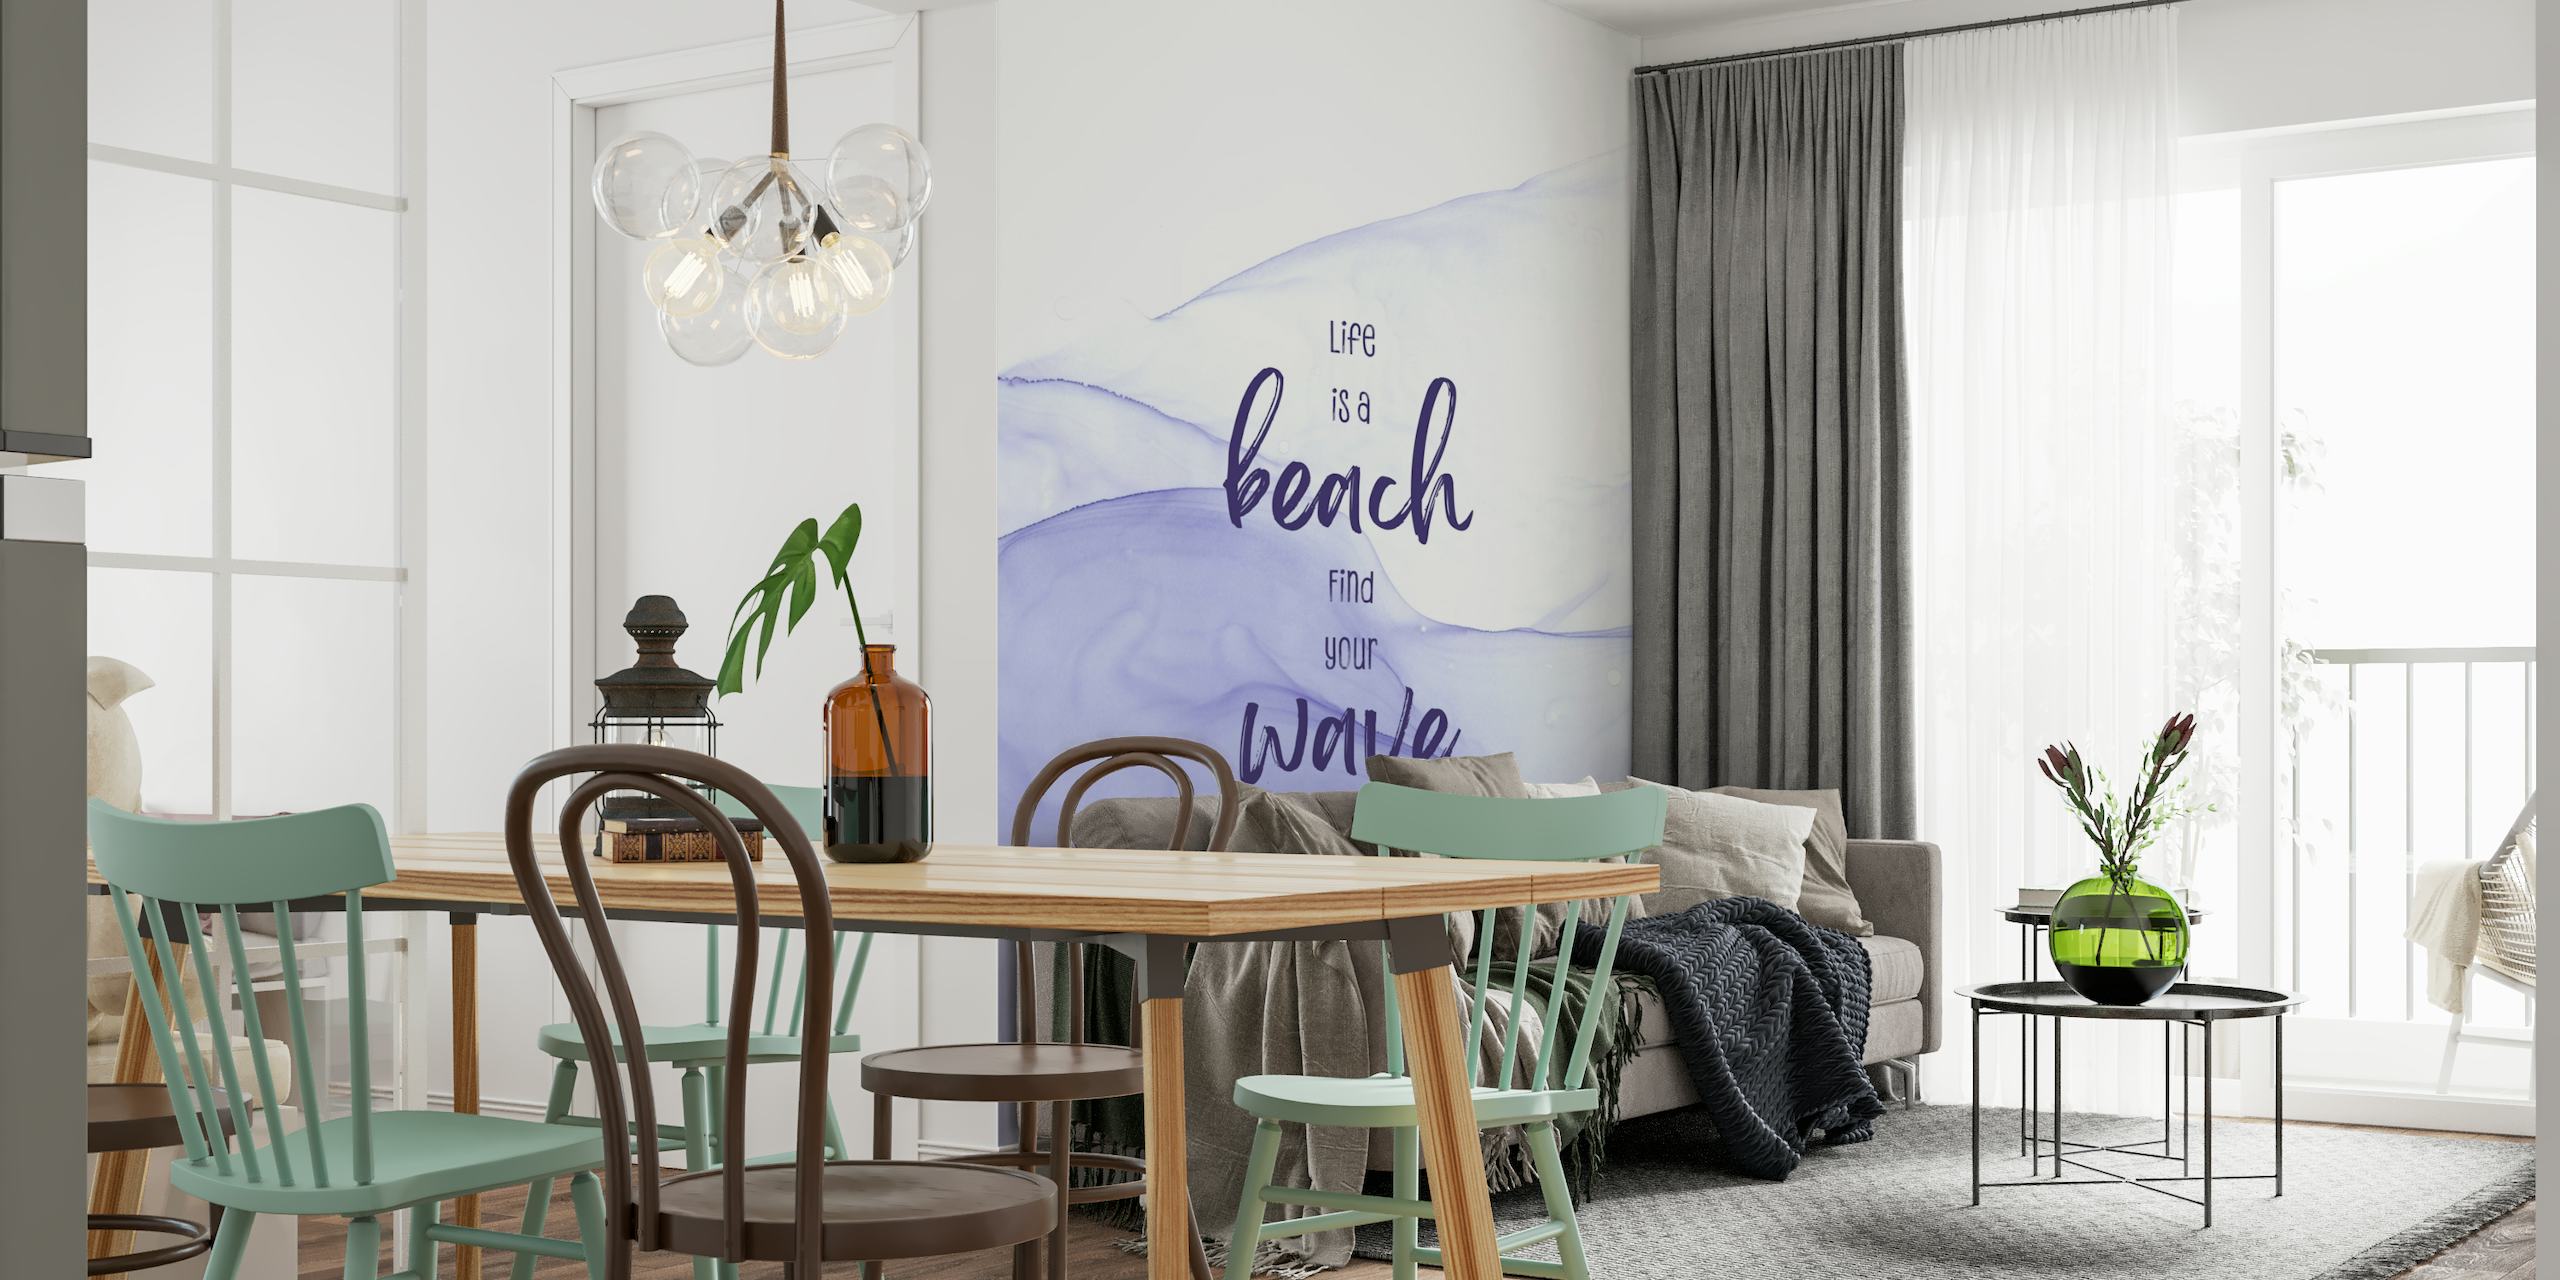 Life is a beach wallpaper